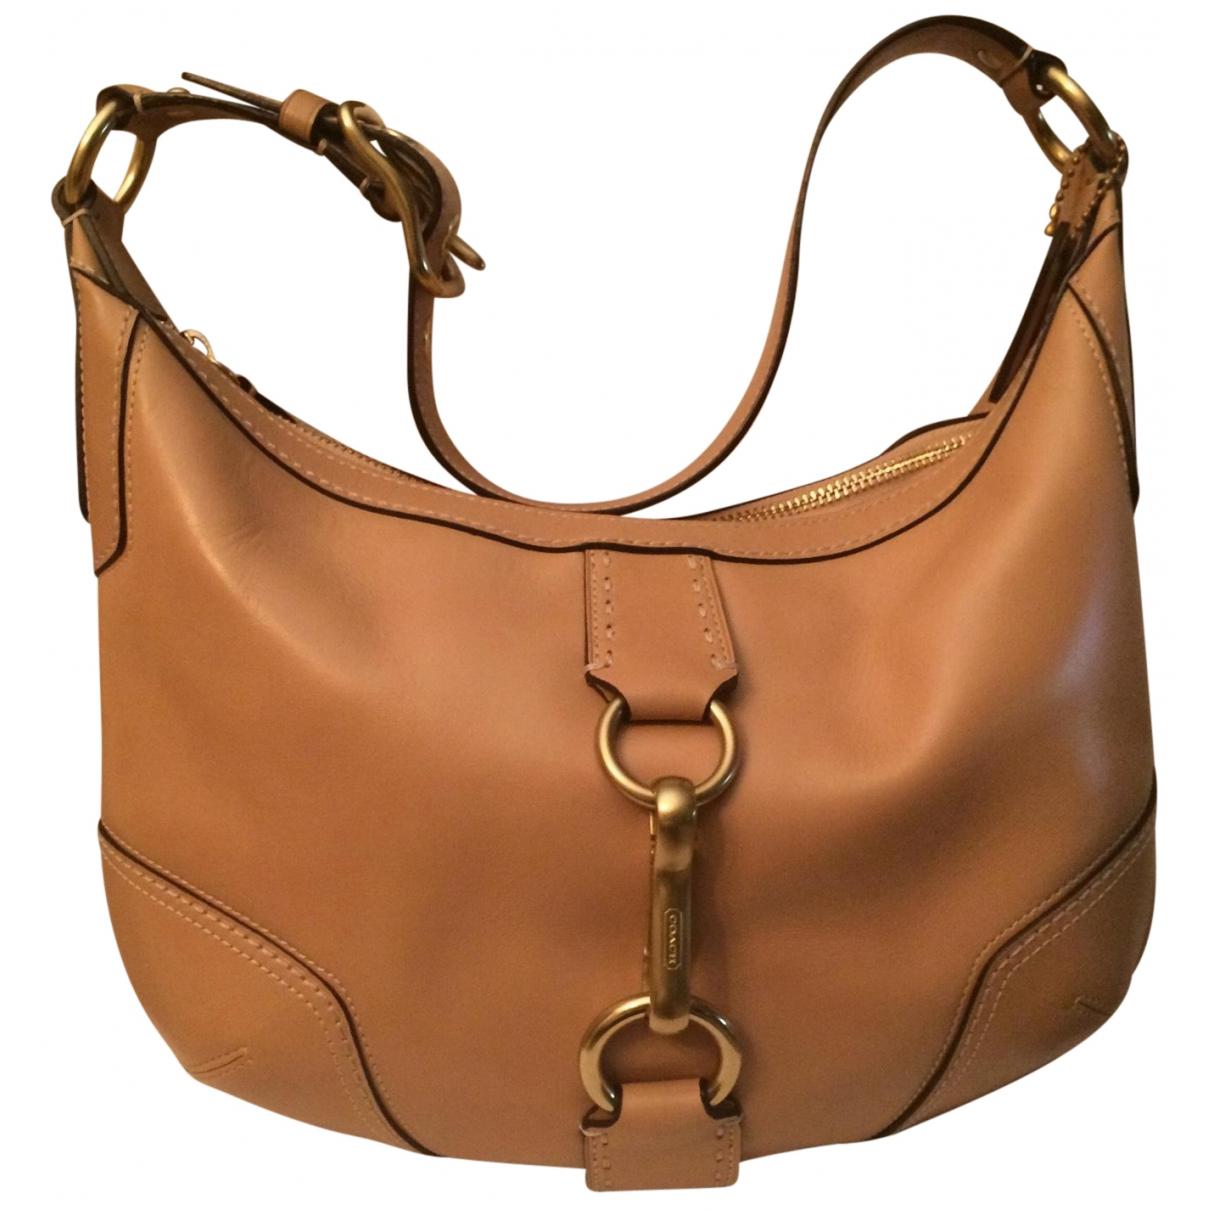 Leather handbag Coach